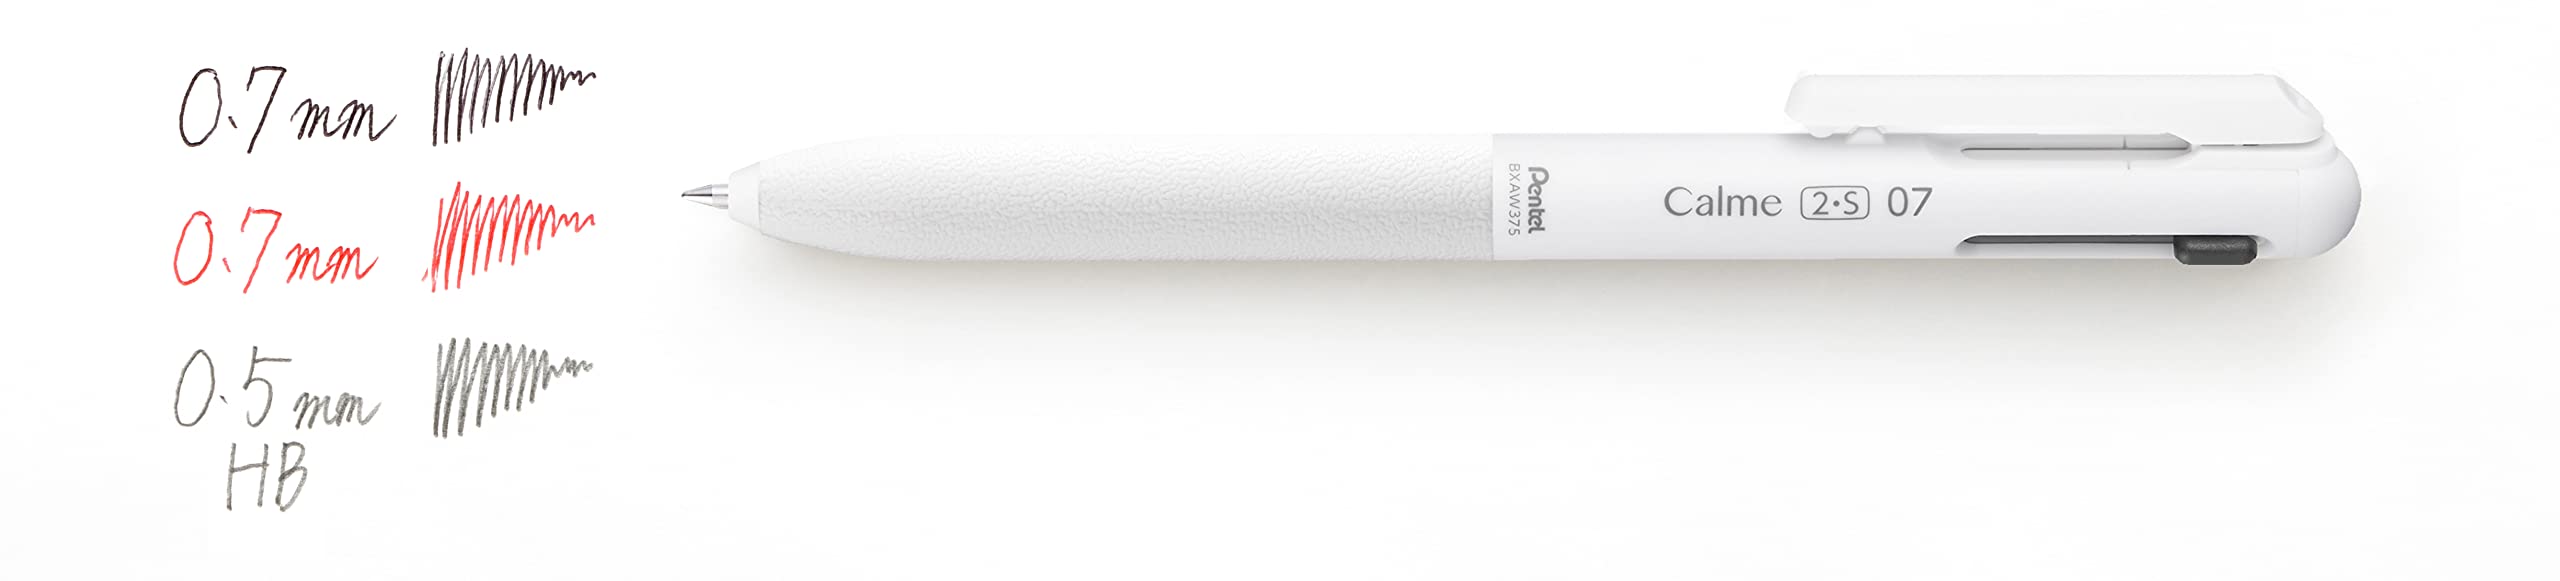 Pentel 0.7mm Calme Multifunctional Ballpoint Pen 0.5 Sharp Grayish White - Bxaw375W